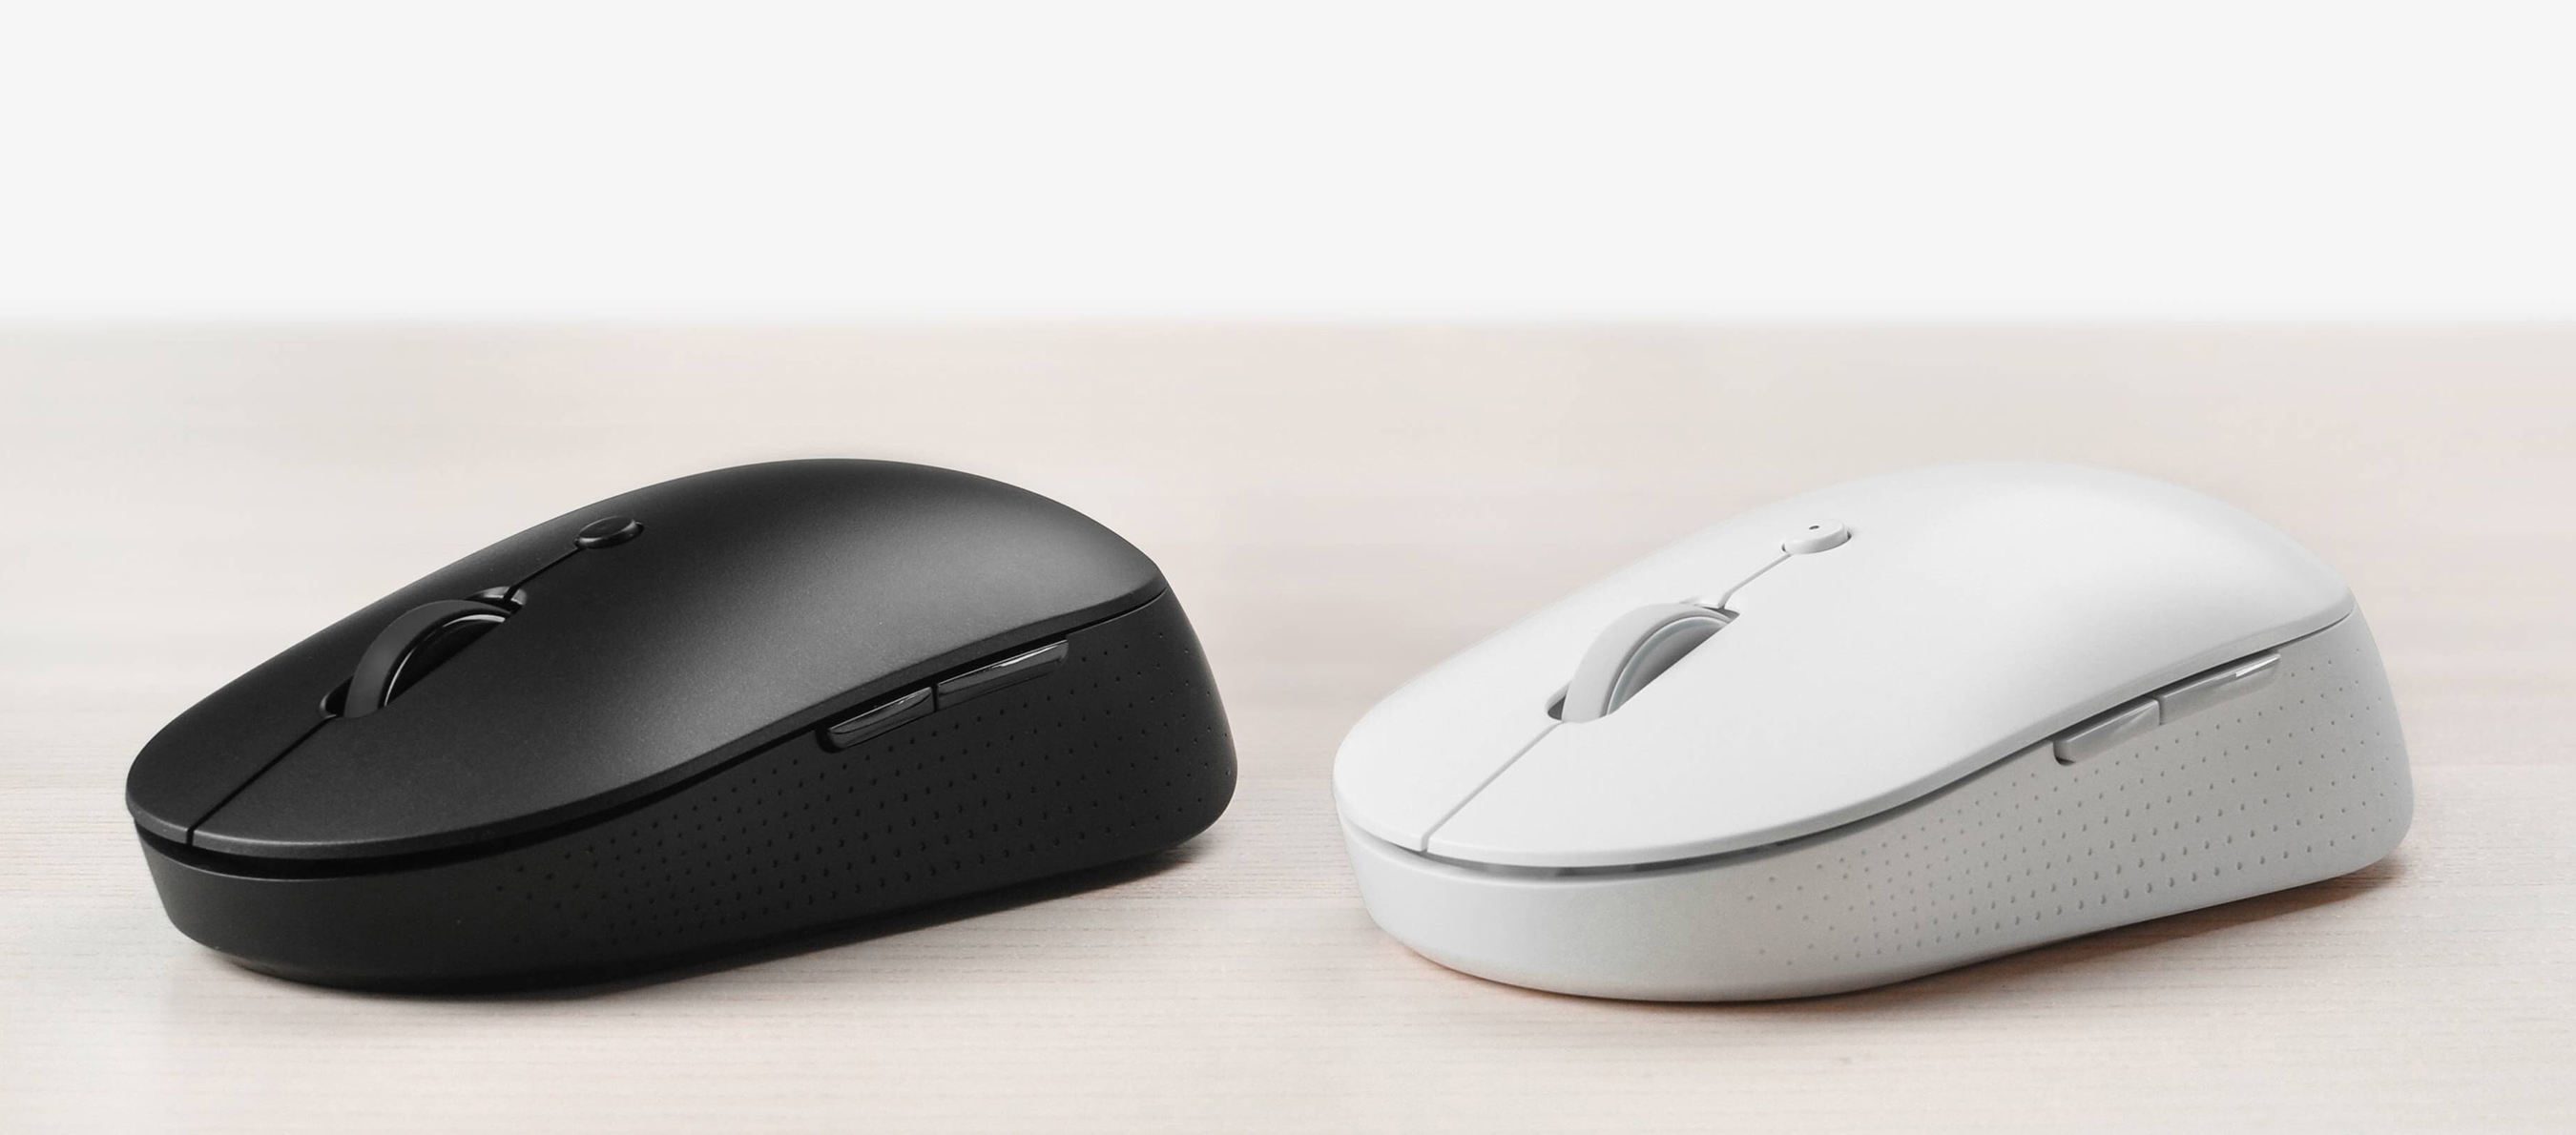 xiaomi-mi-dual-mode-wireless-mouse-silent-edition-2